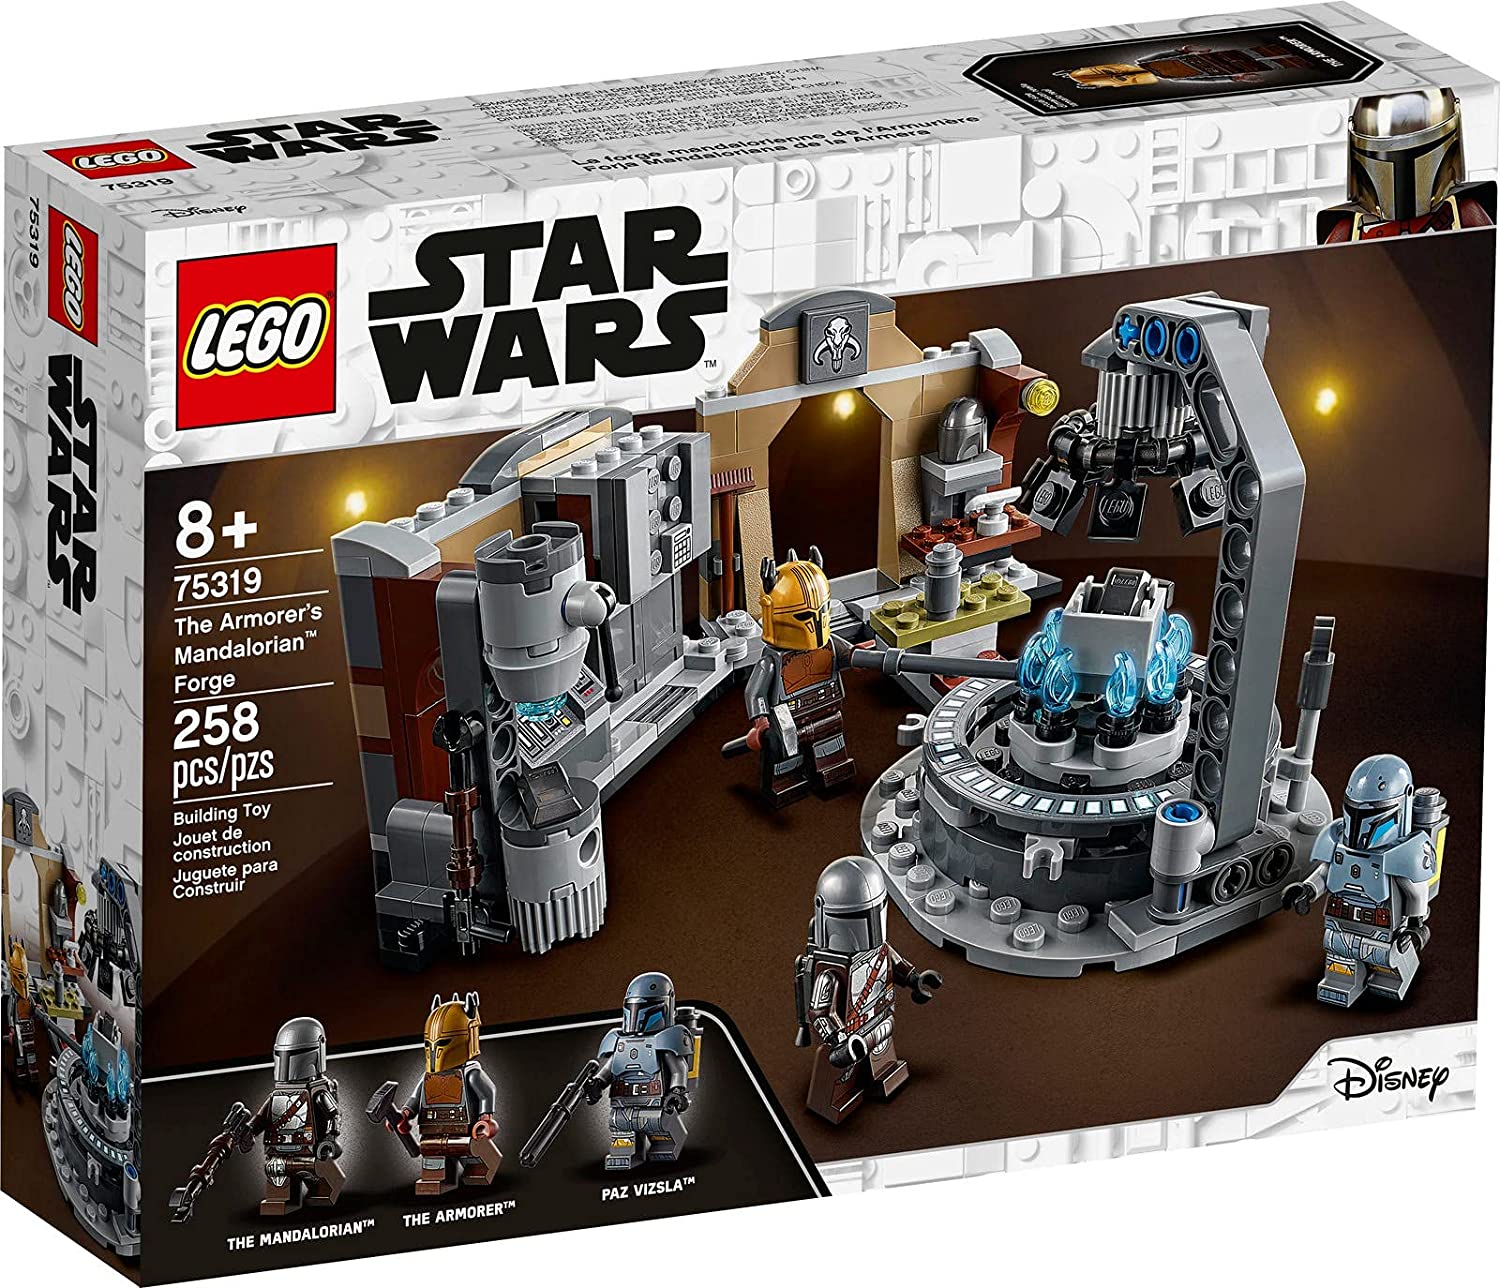 LEGO Star Wars The Armorer's Mandalorian Forge 75319 Building Kit $29.99 @Target